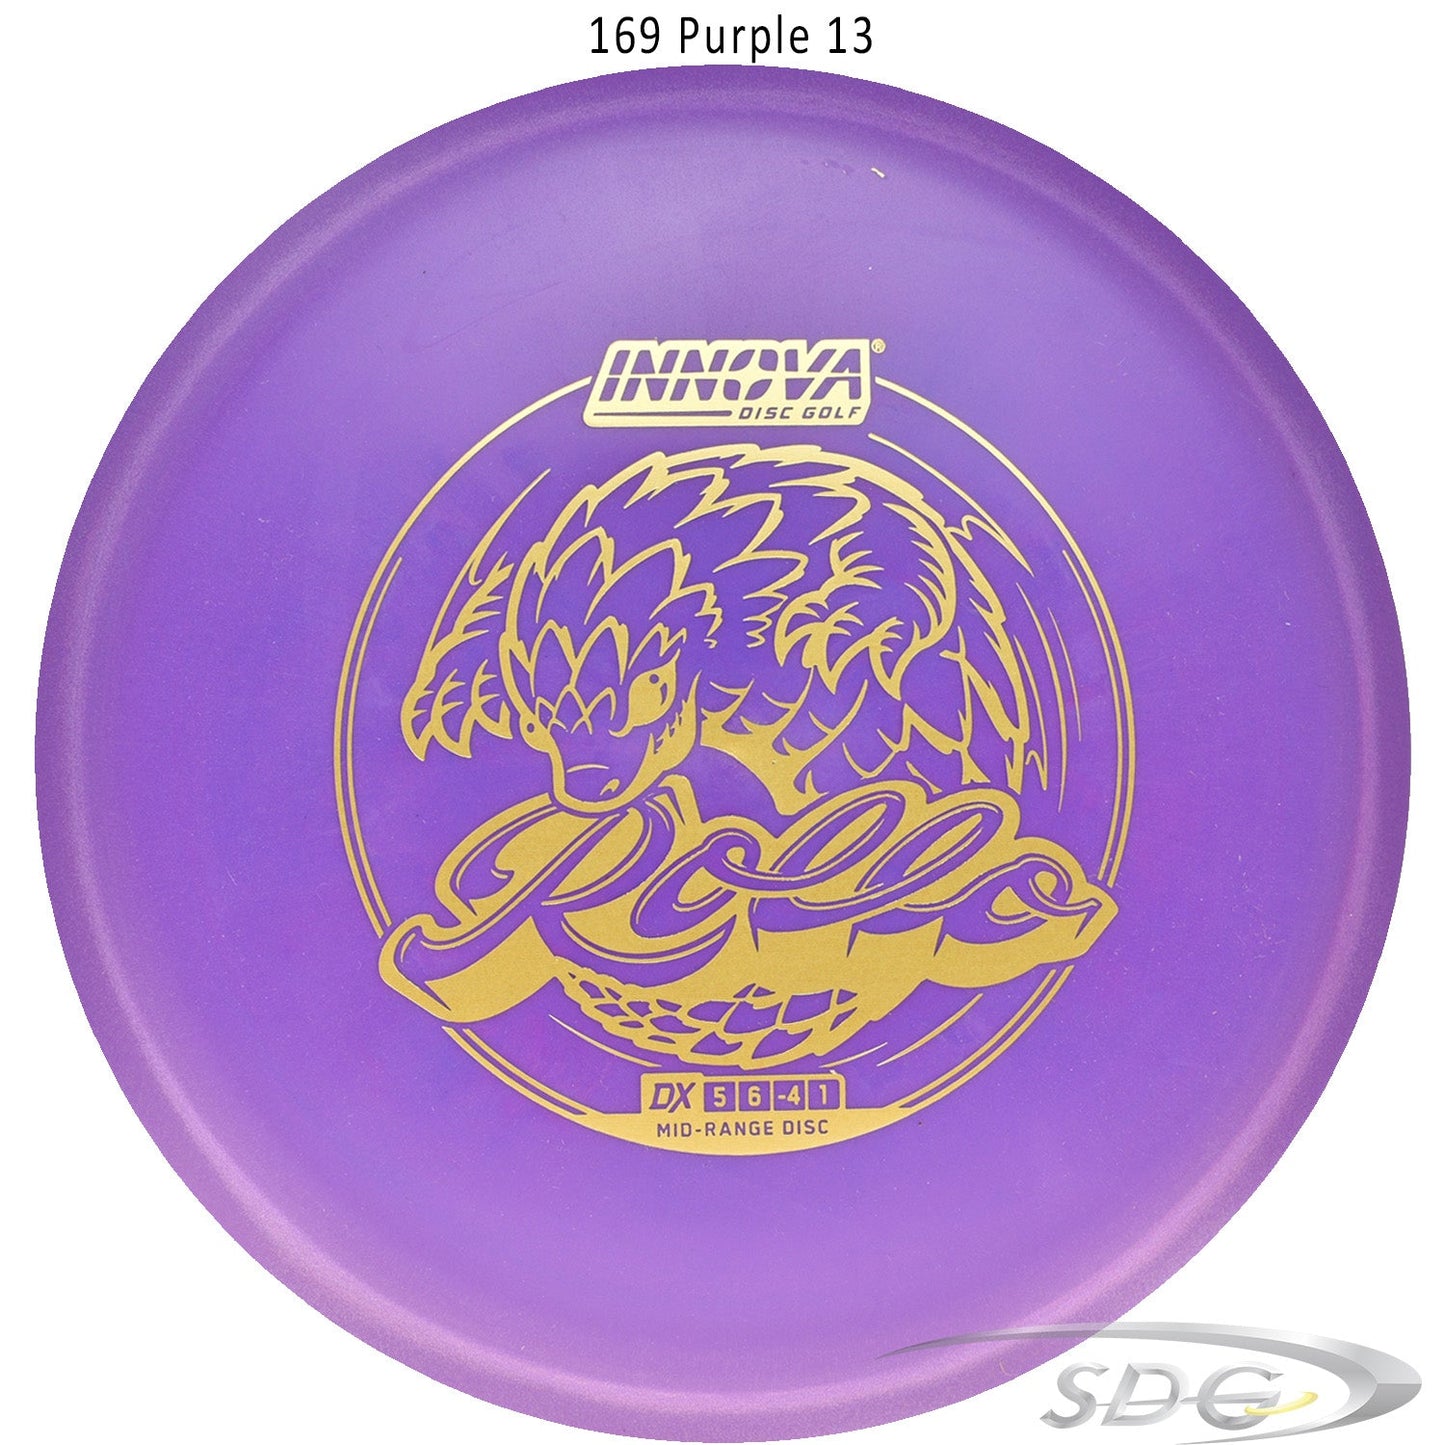 innova-dx-rollo-disc-golf-mid-range 169 Purple 13 